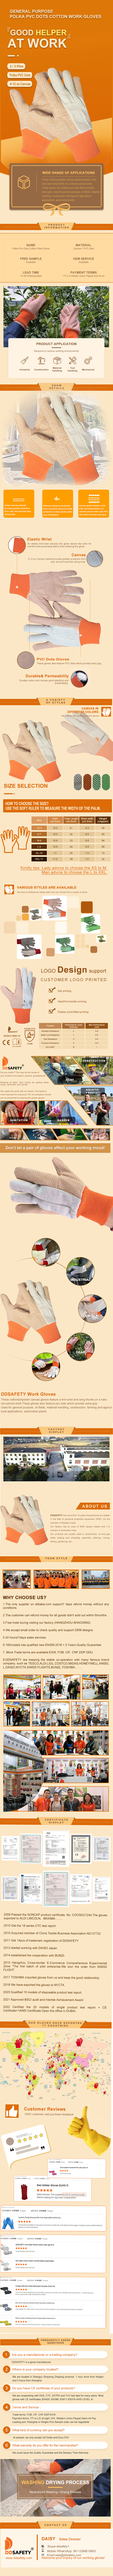 Cotton Canvas Gloves With Orange Pvc Dots - DCD212 Cotton Canvas Gloves With Orange Pvc Dots - DCD212 gloves,pvc dots gloves,canvas gloves,canvas pvc dots gloves